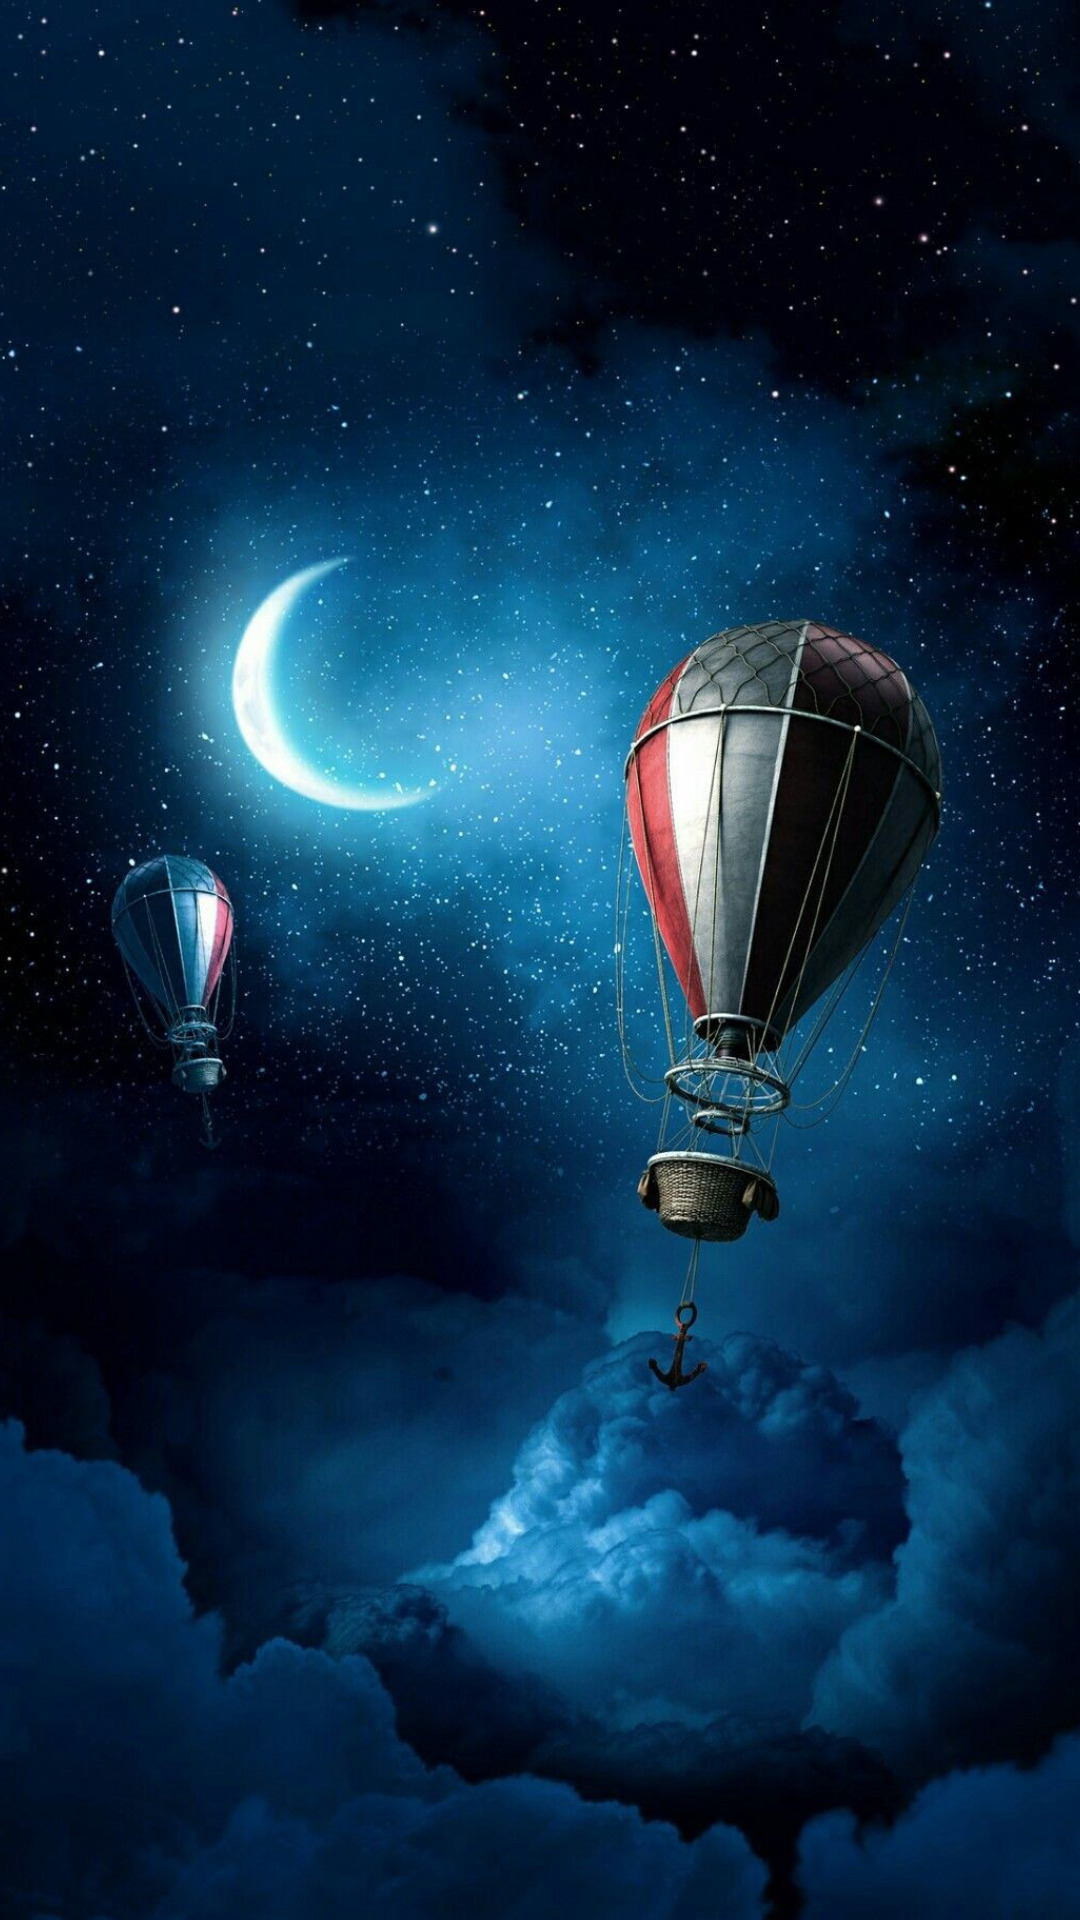 wallpaper whatsapp tumblr,sky,hot air balloon,light,atmosphere,vehicle